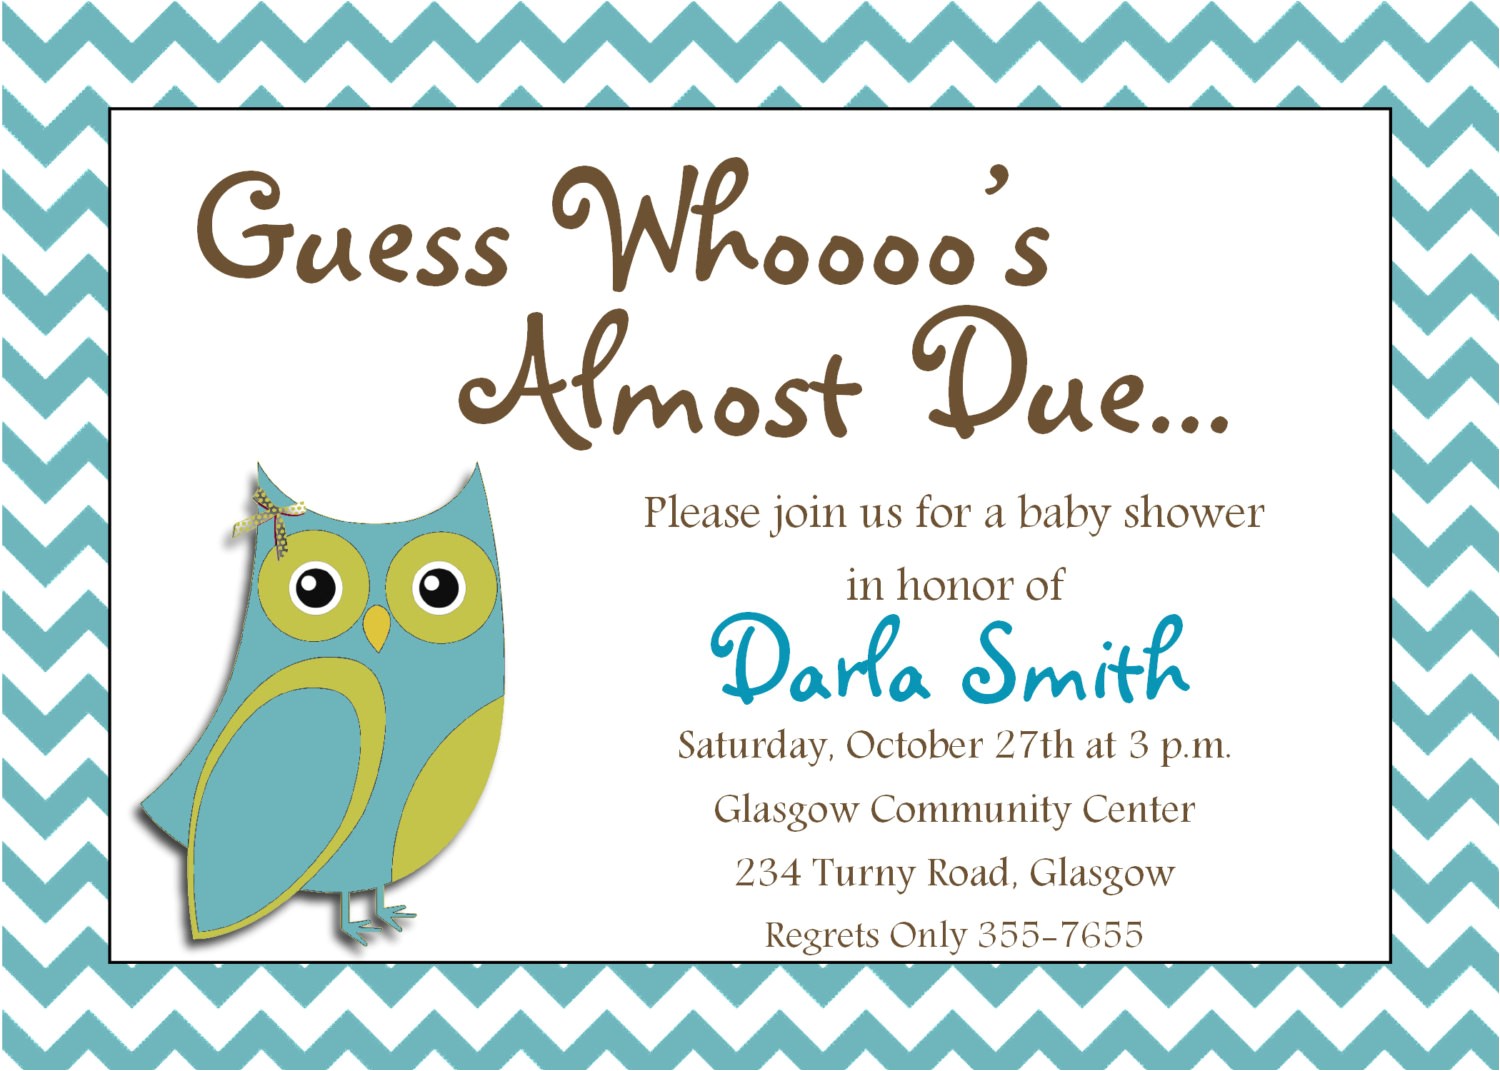 Free Customizable Baby Shower Invitations Free Customizable Invitations